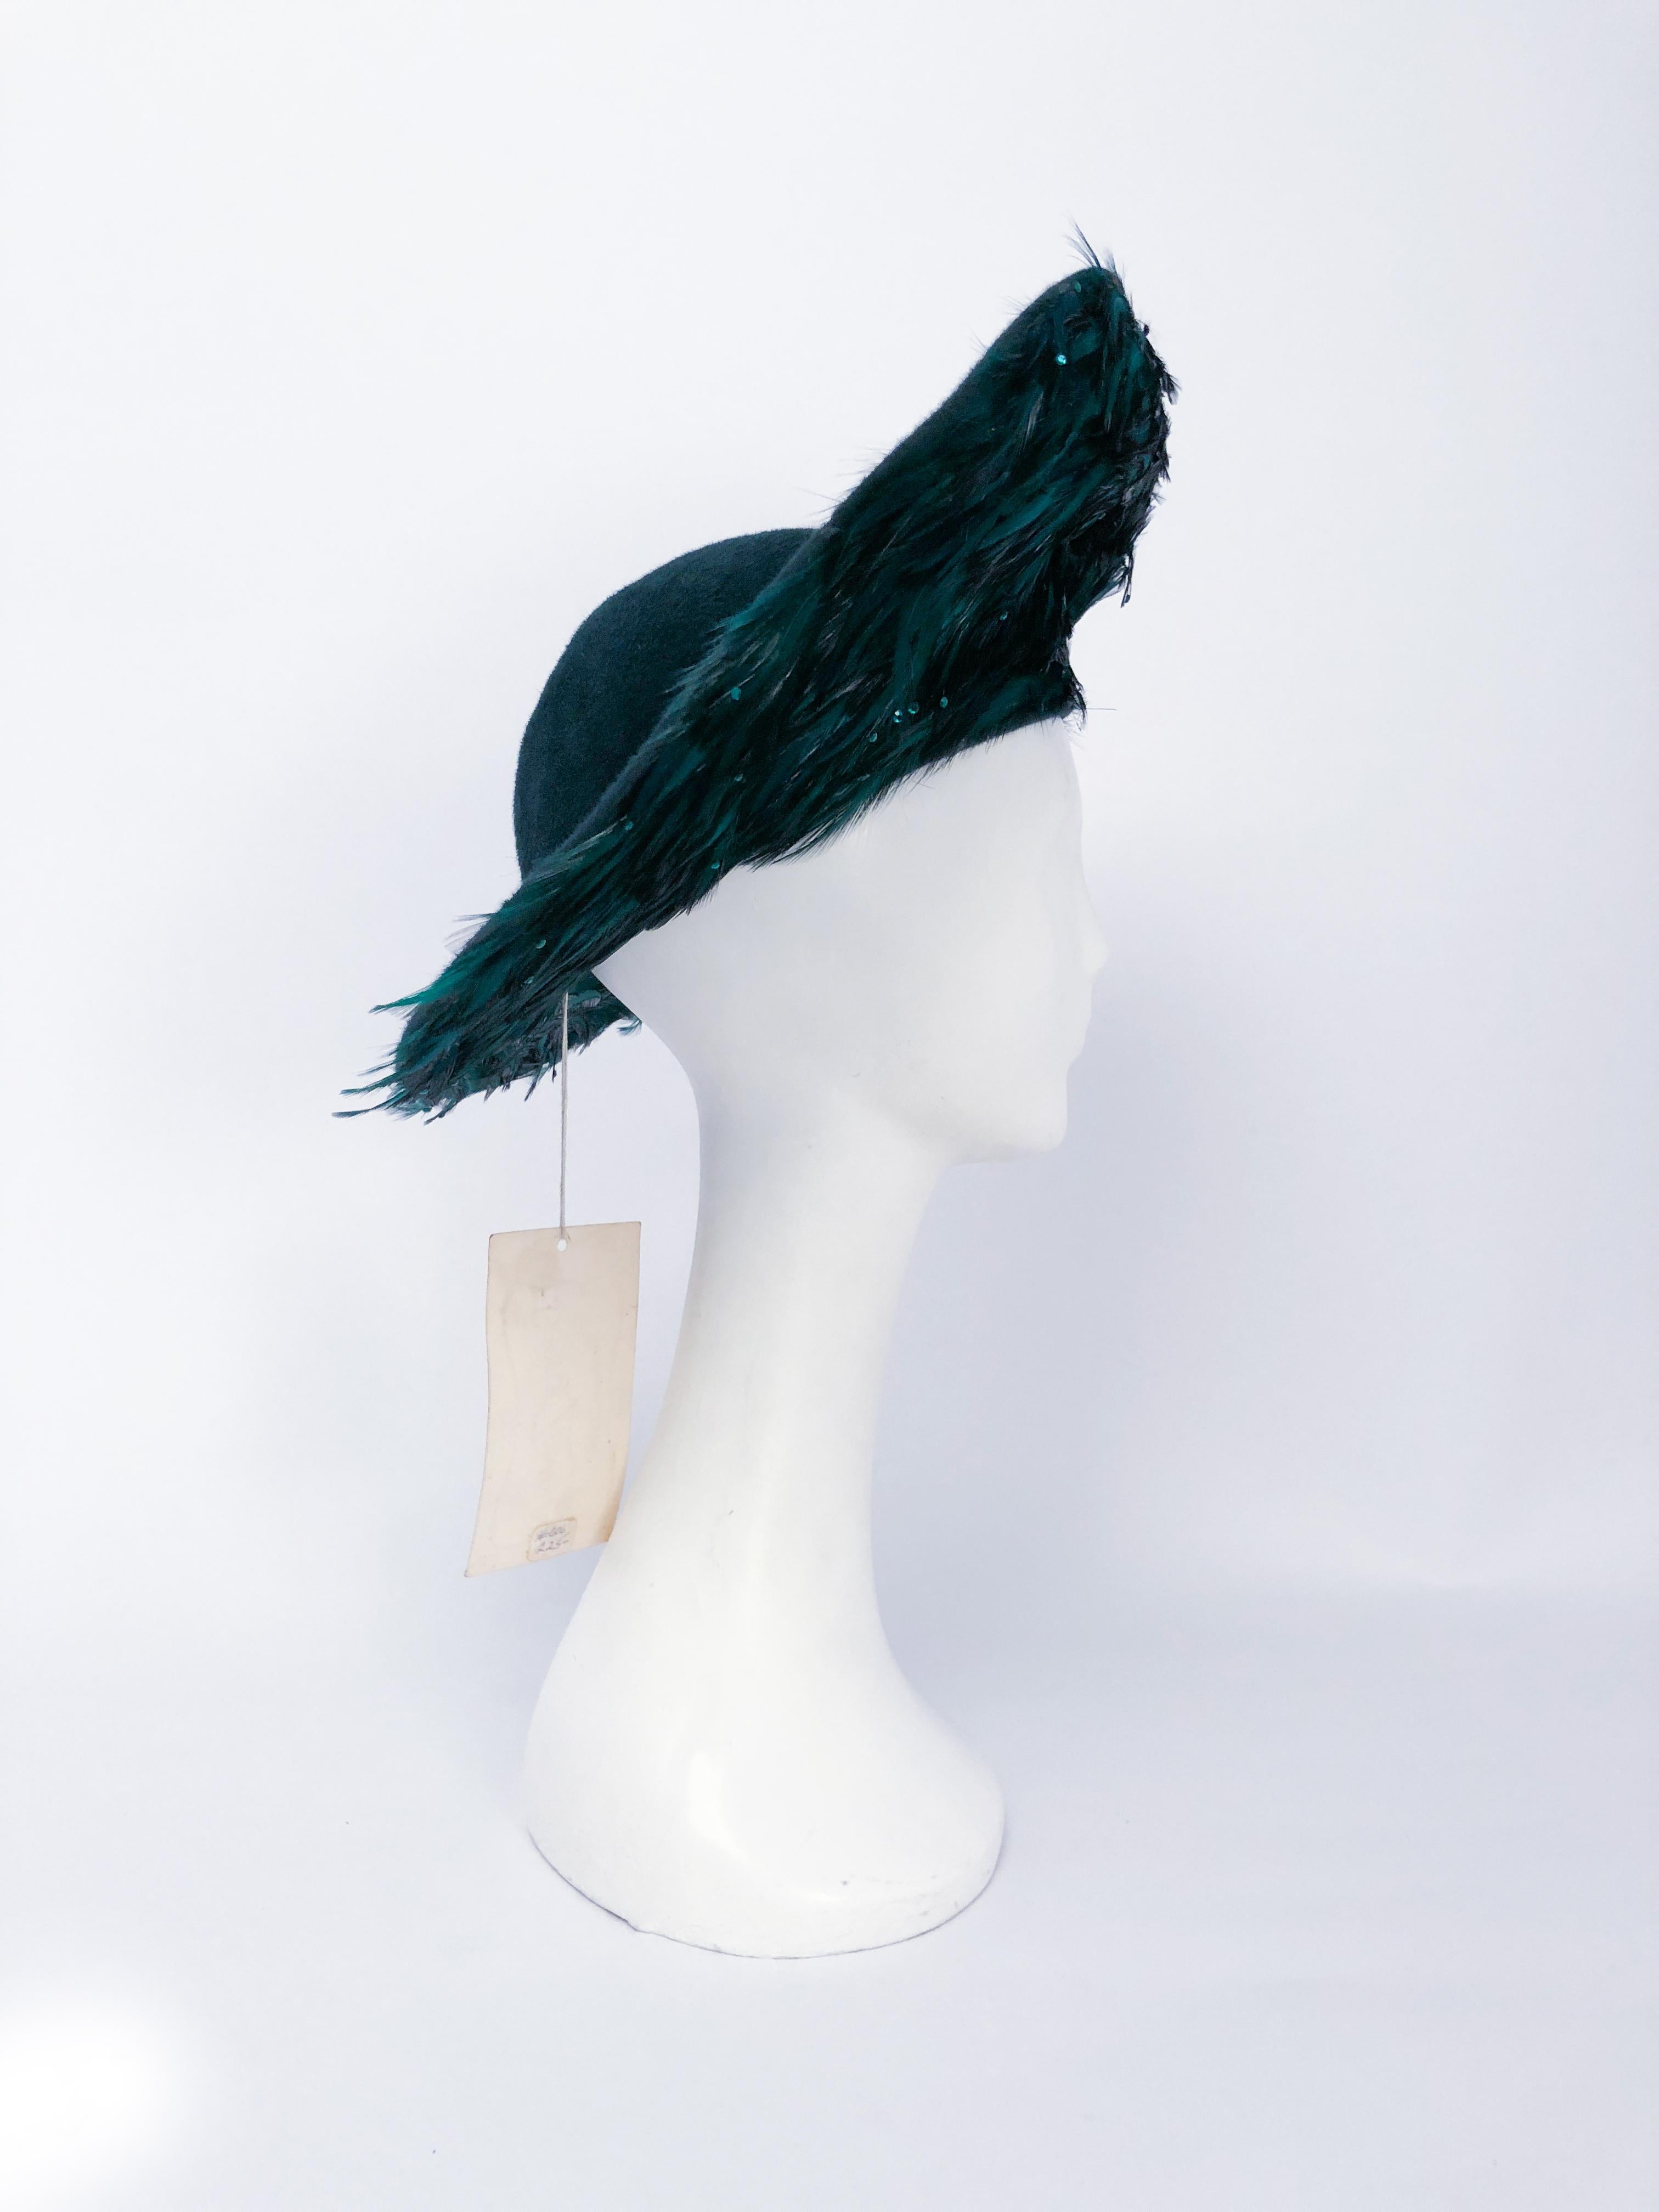 Gray George Zamau'l Emerald Hat with Feathered Brim, 1980s 